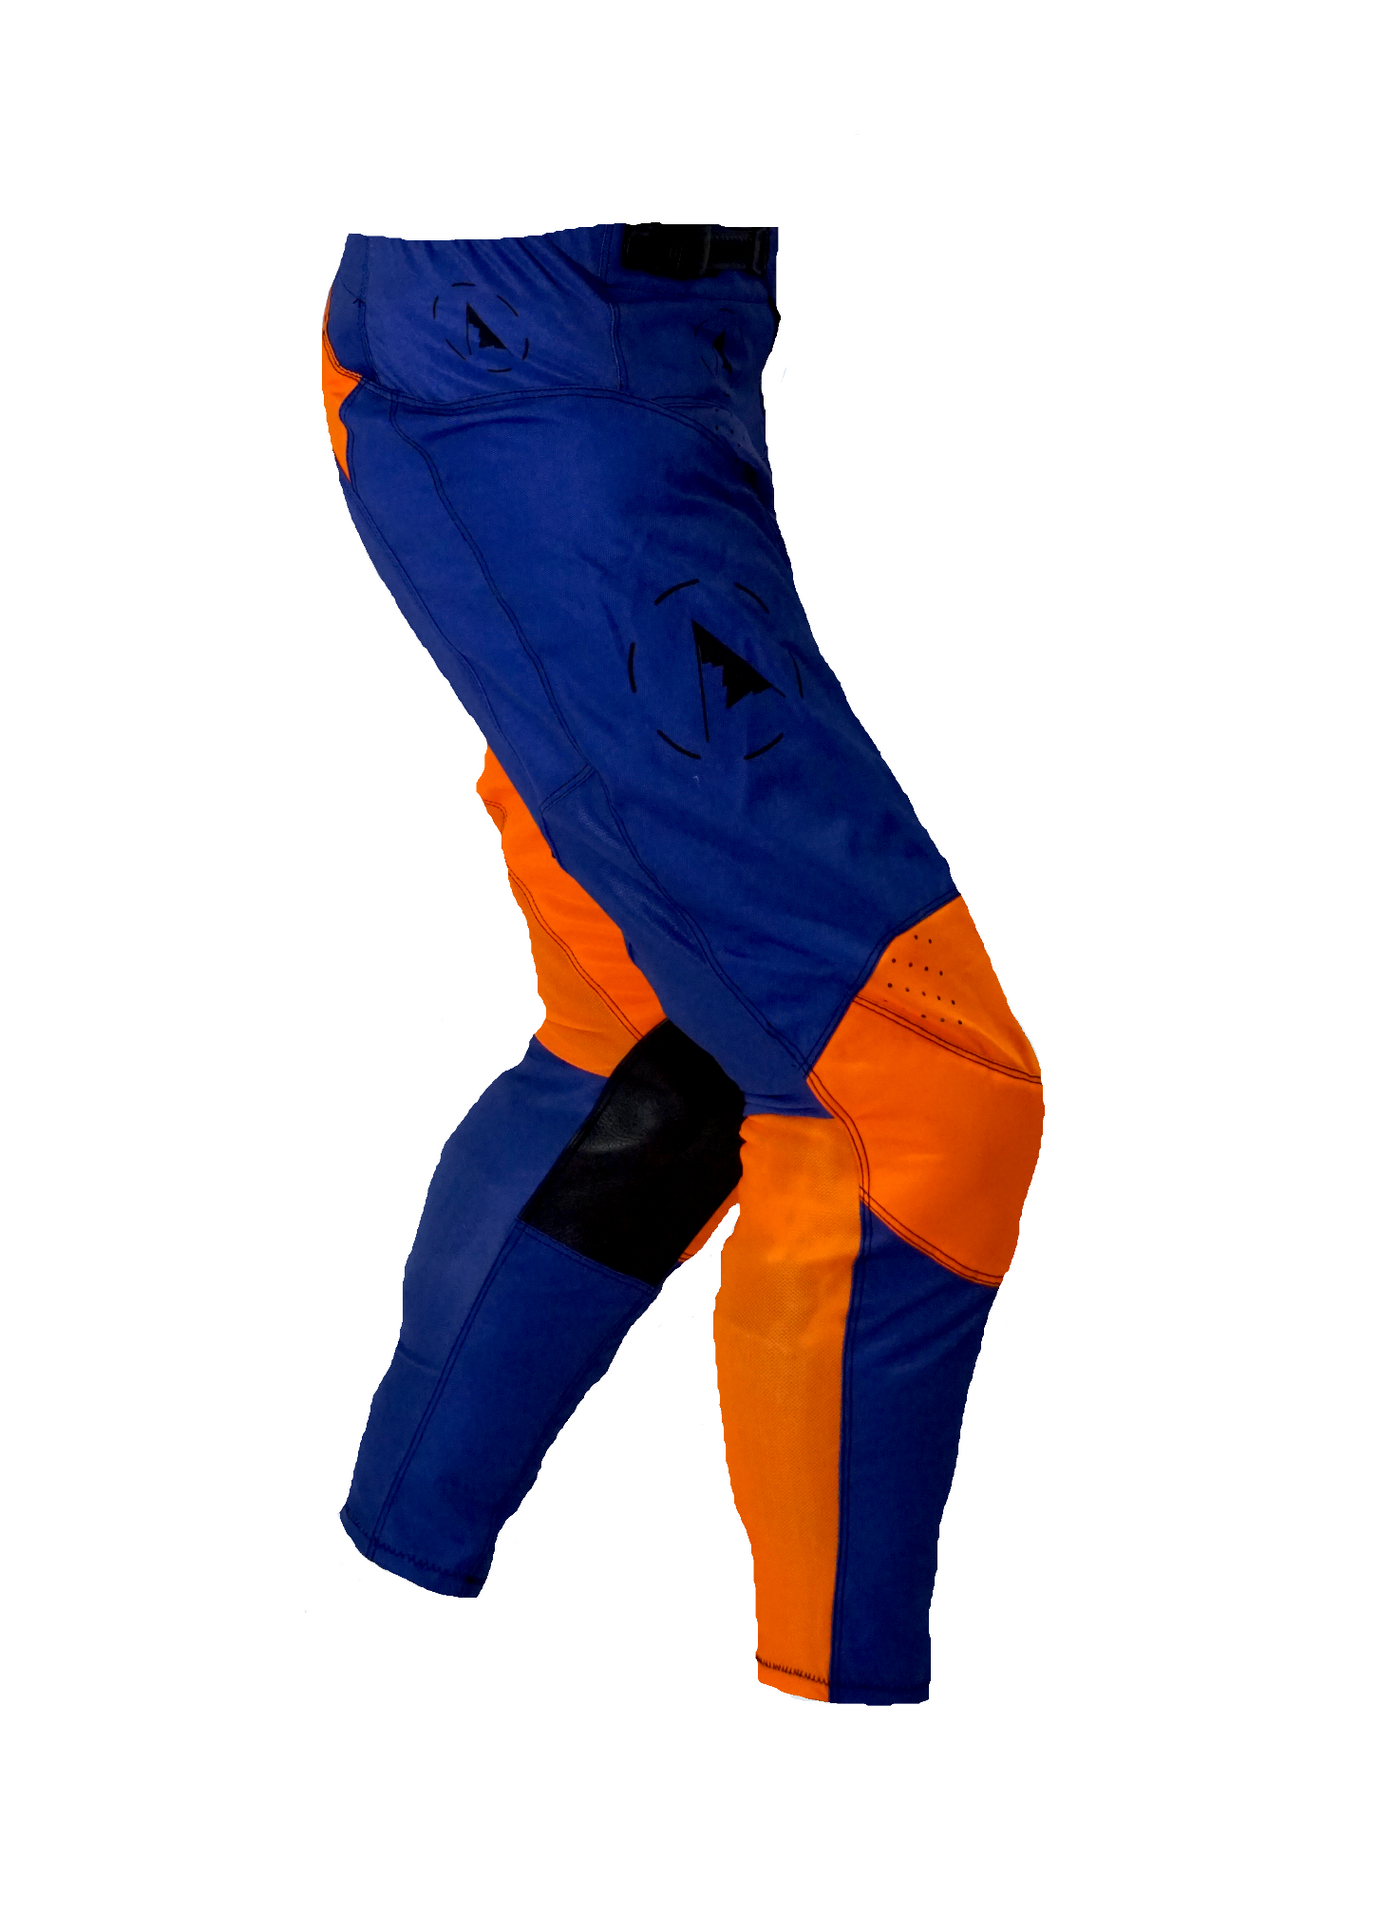 Pants Mx 22 - Orange and Blue